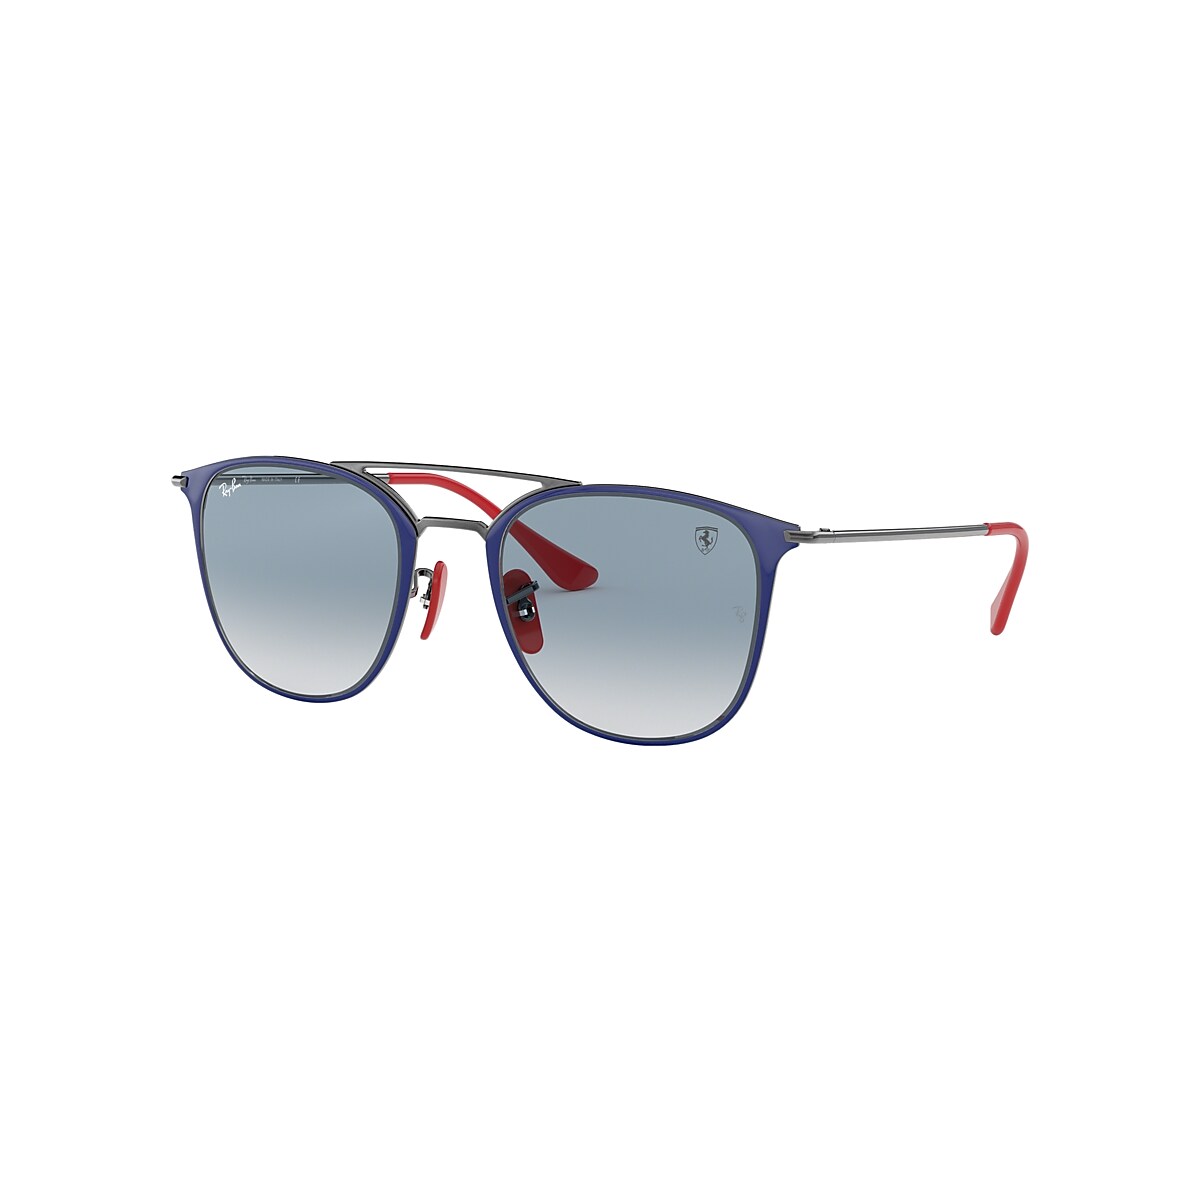 SCUDERIA FERRARI COLLECTION RB3601M Sunglasses in Blue Light Blue - RB3601M Ray-Ban® US